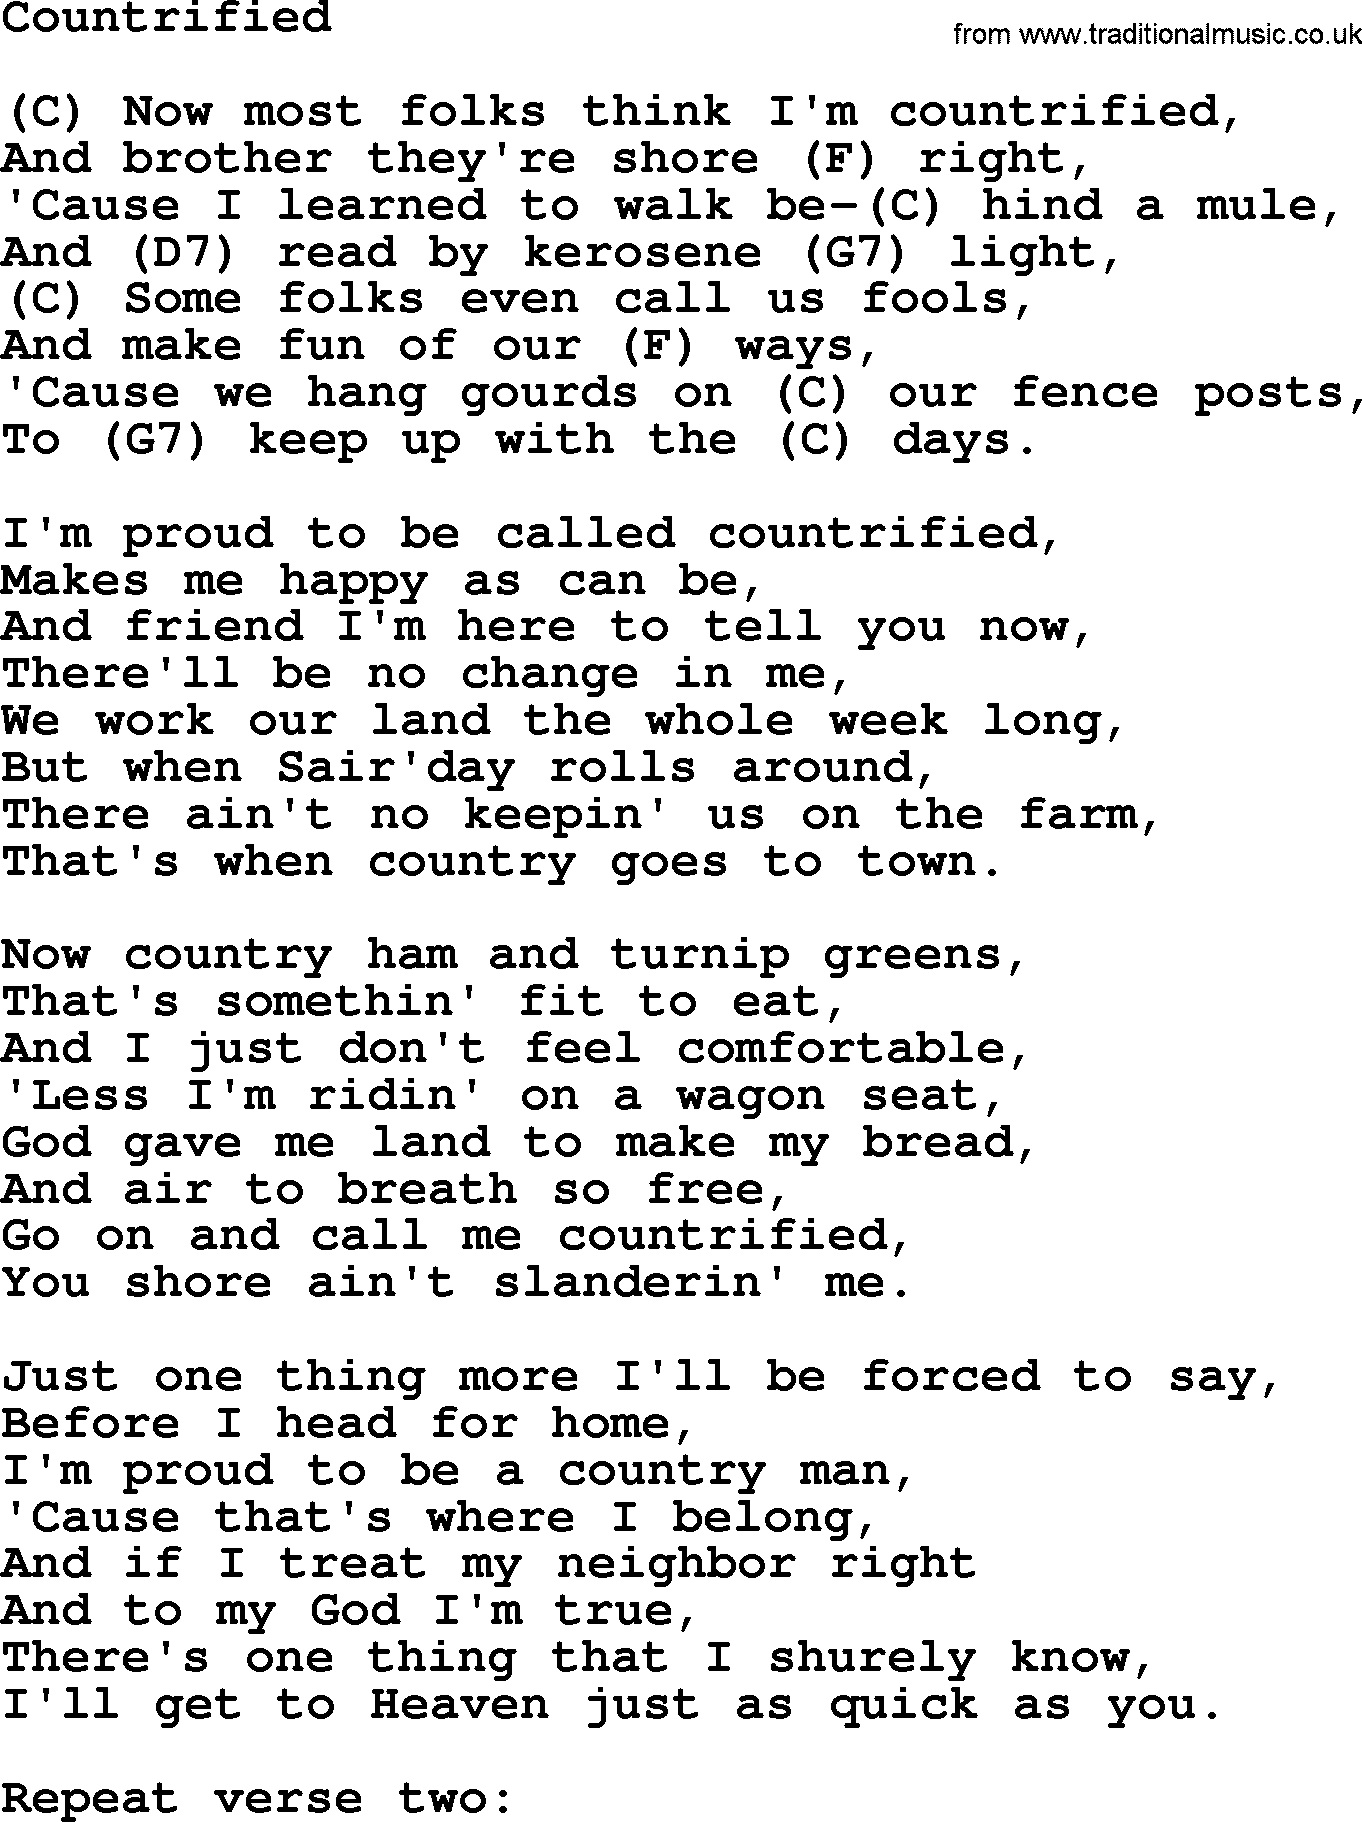 Hank Williams song Countrified, lyrics and chords